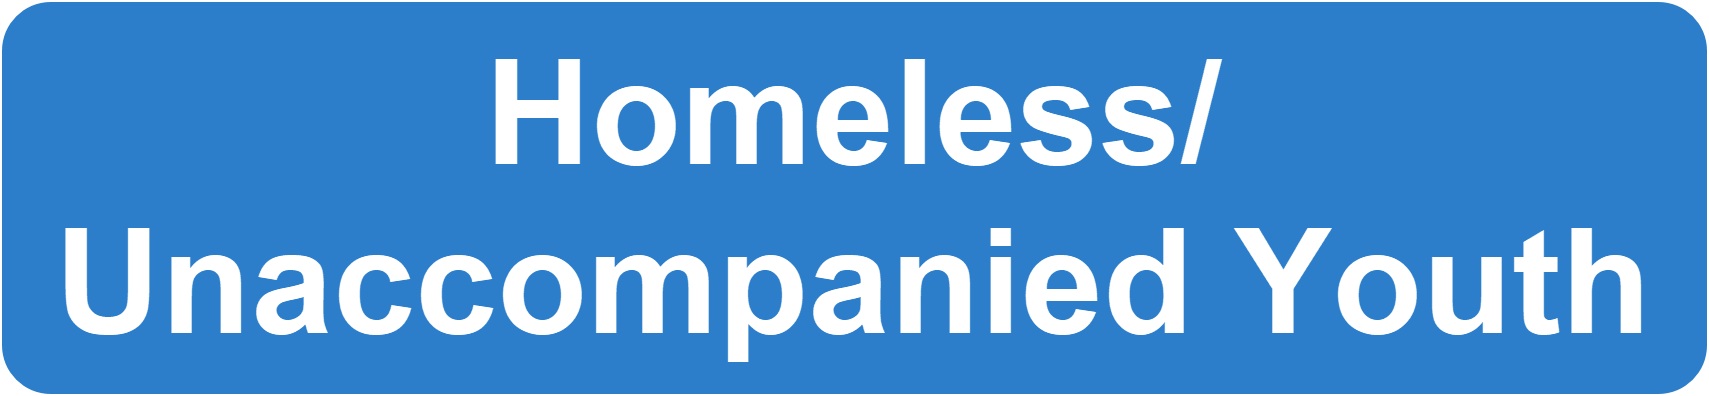 Homeless/Unaccompanied Youth